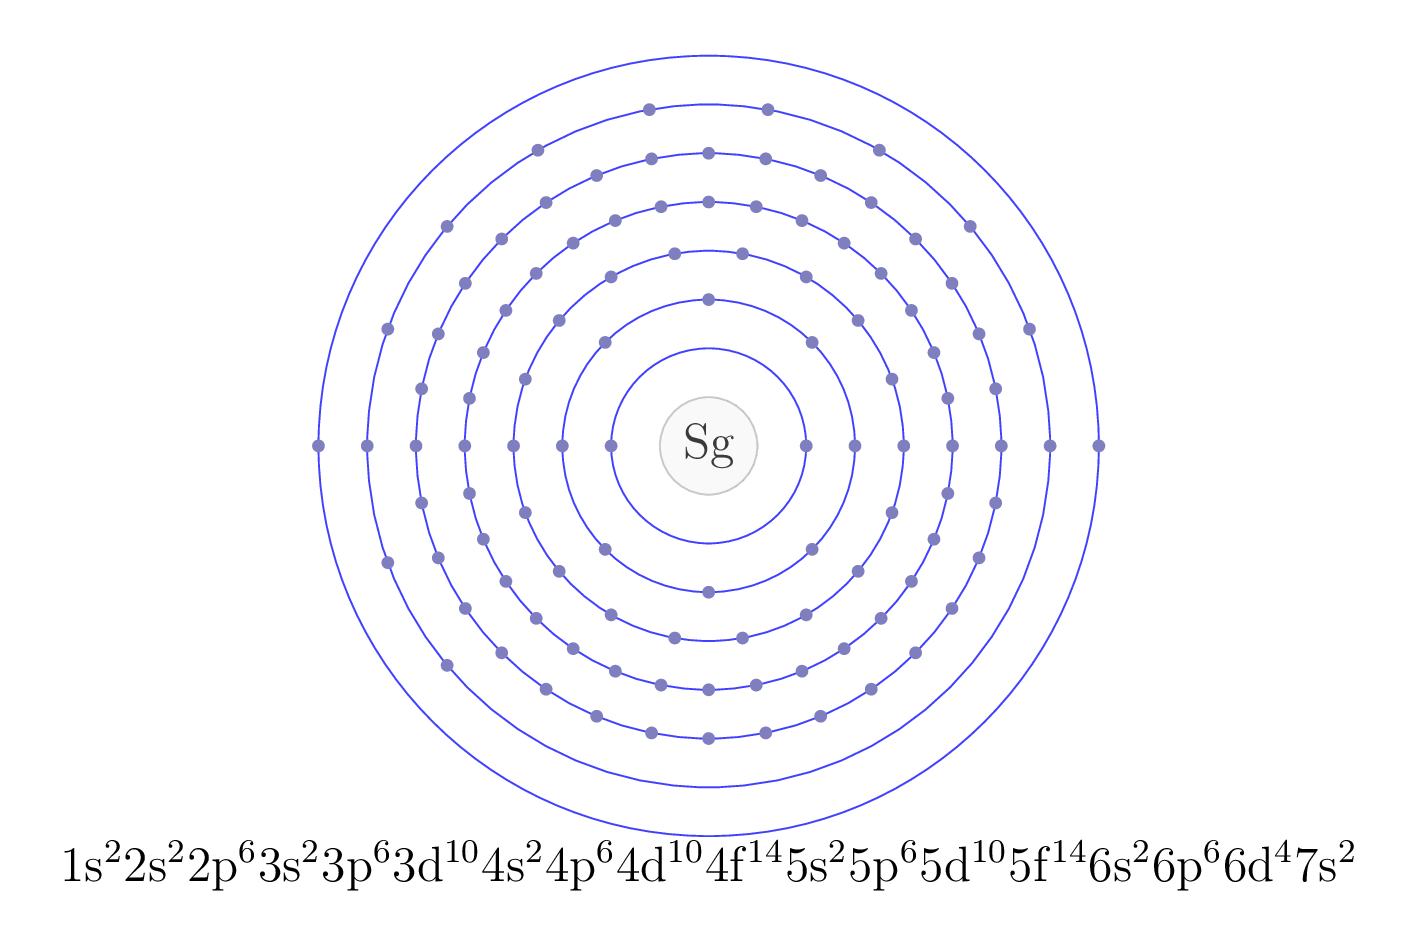 electron configuration of element Sg